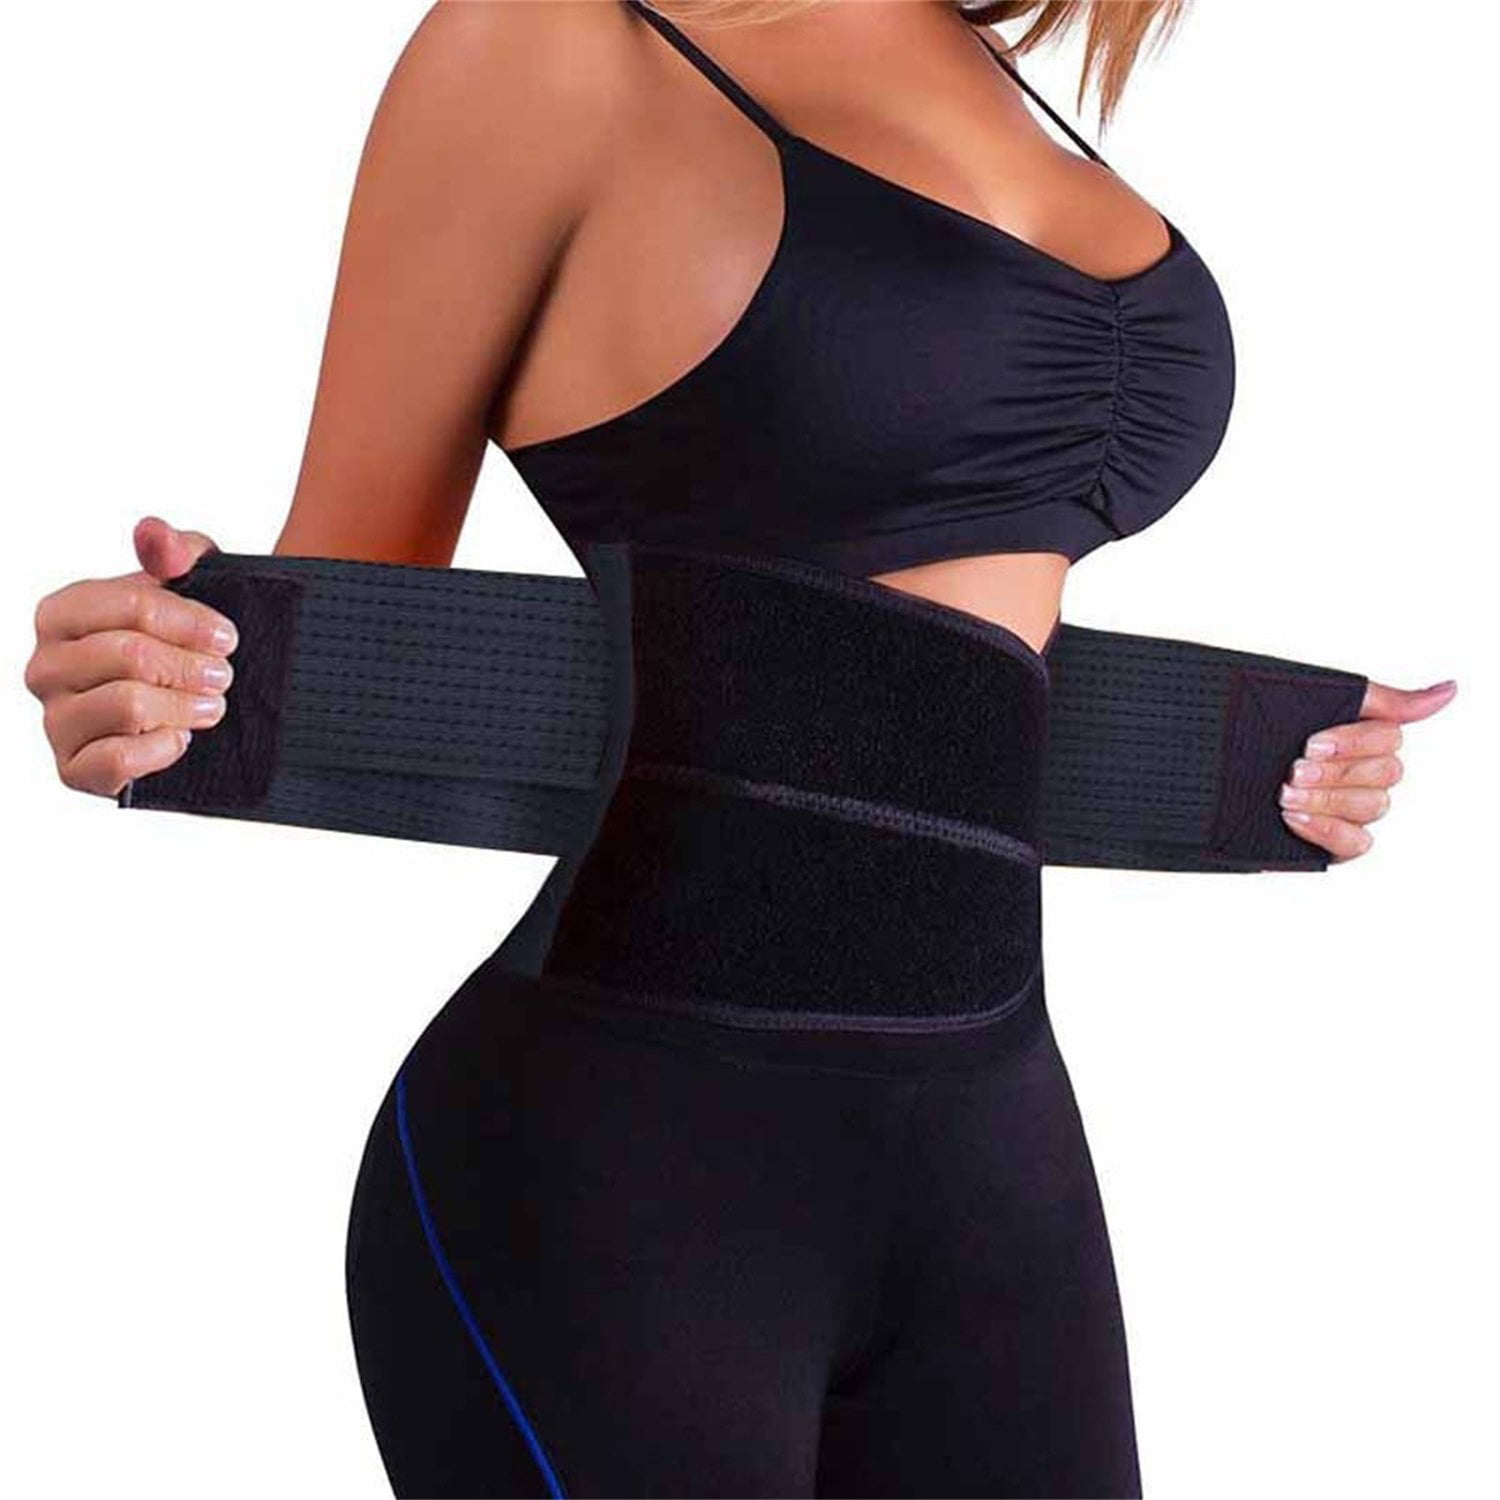 Waist Trainer Belt Waist Cincher Trimmer Slimming Body Shaper Belts Sport Girdle for Women 